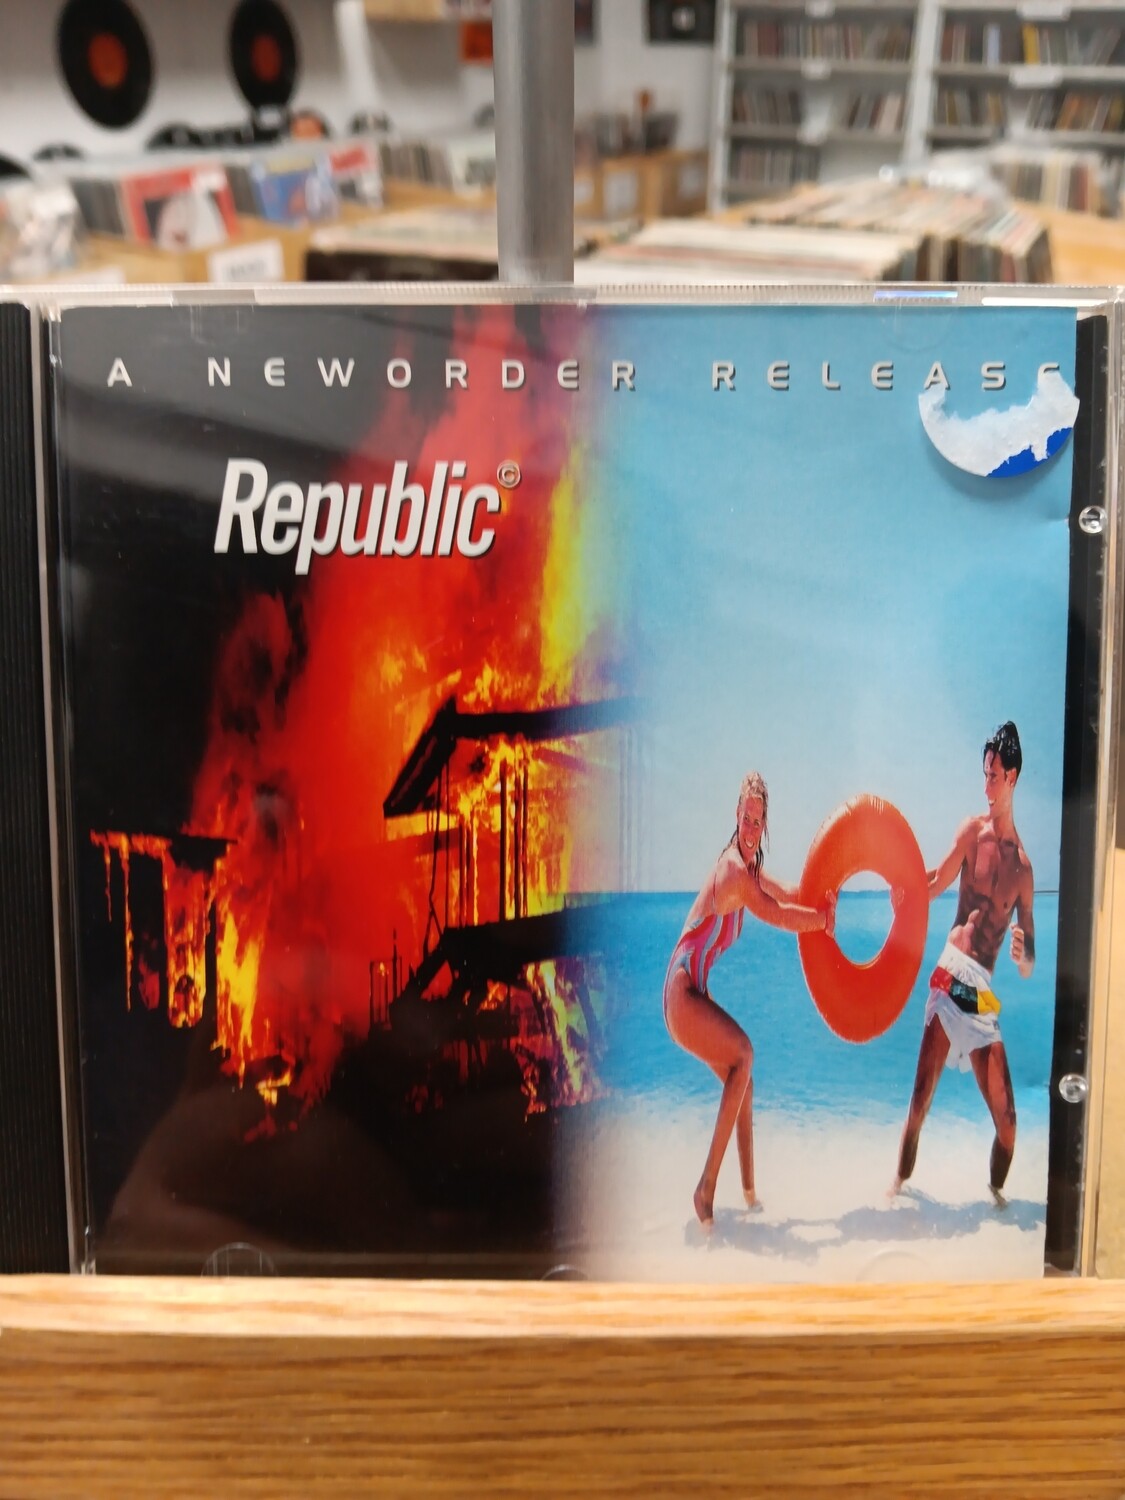 NEW ORDER - Republic (CD)